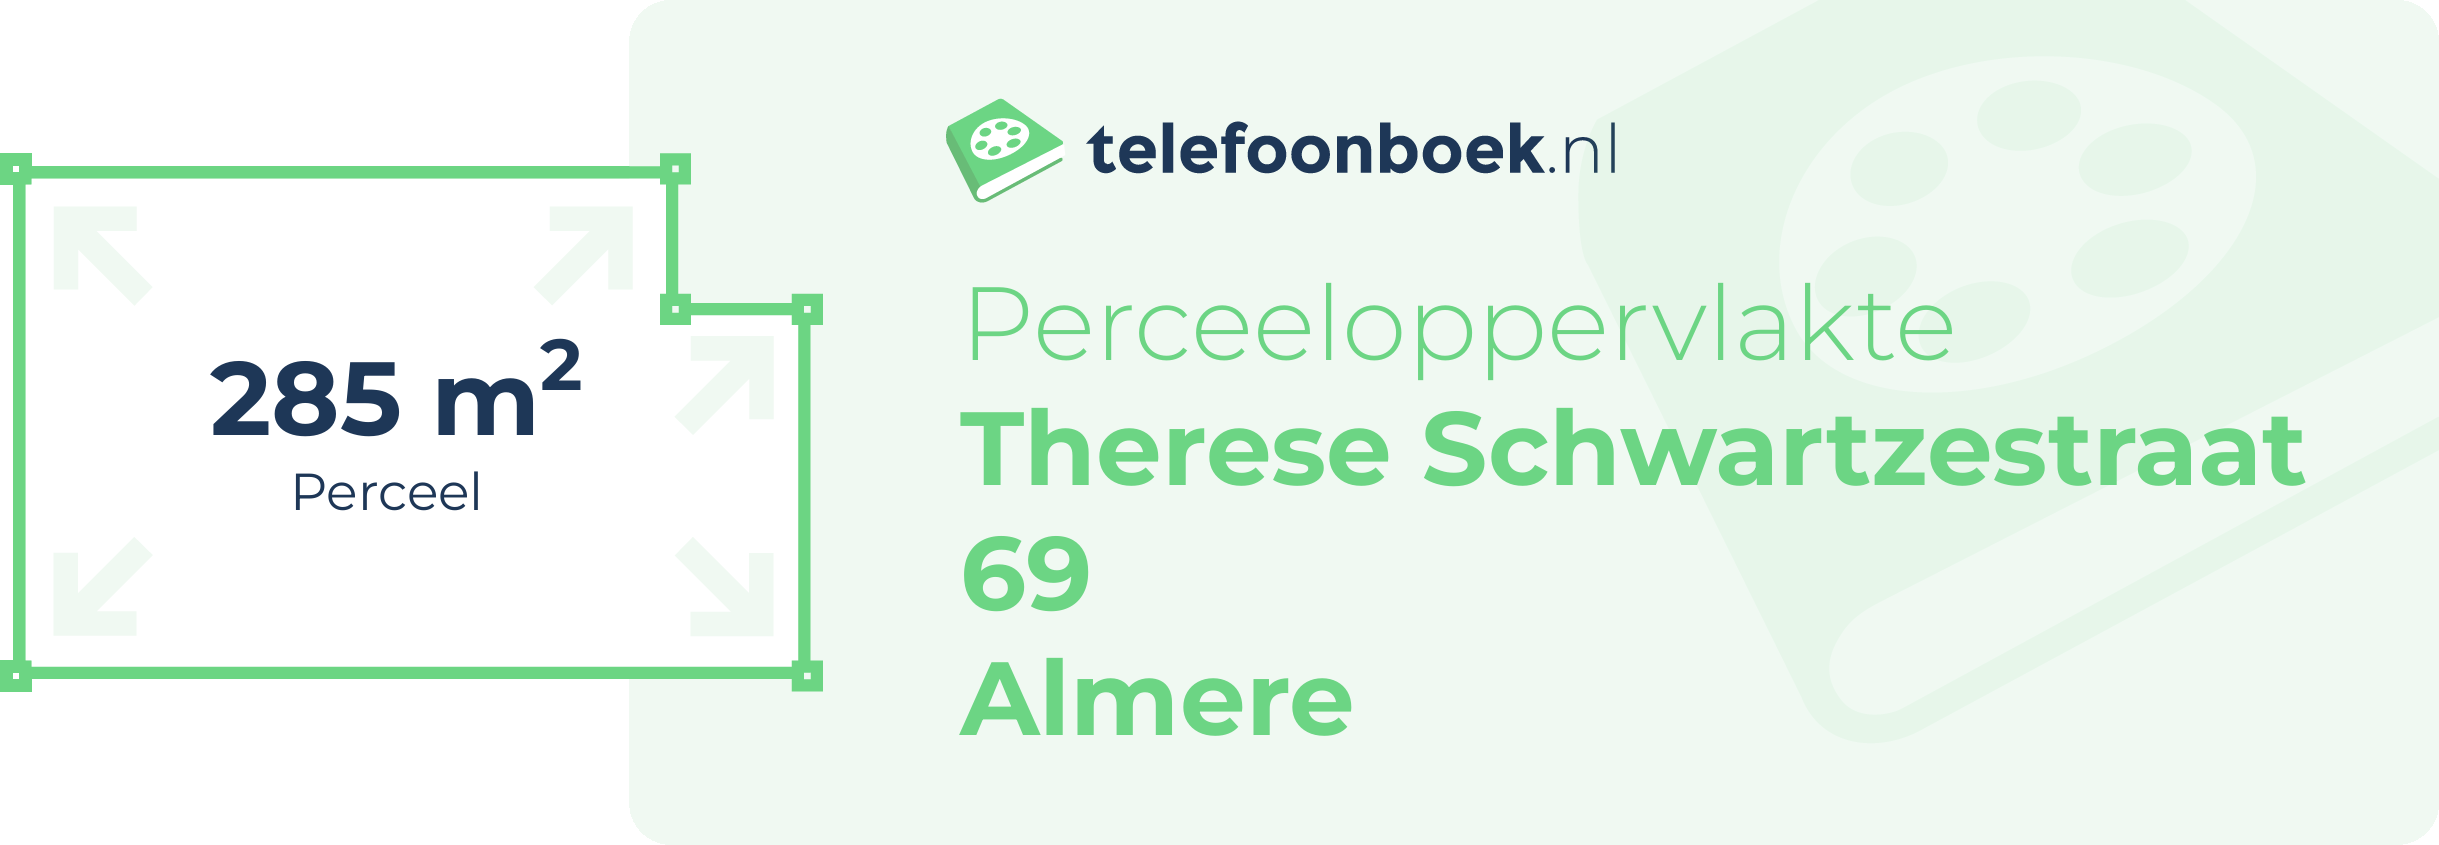 Perceeloppervlakte Therese Schwartzestraat 69 Almere